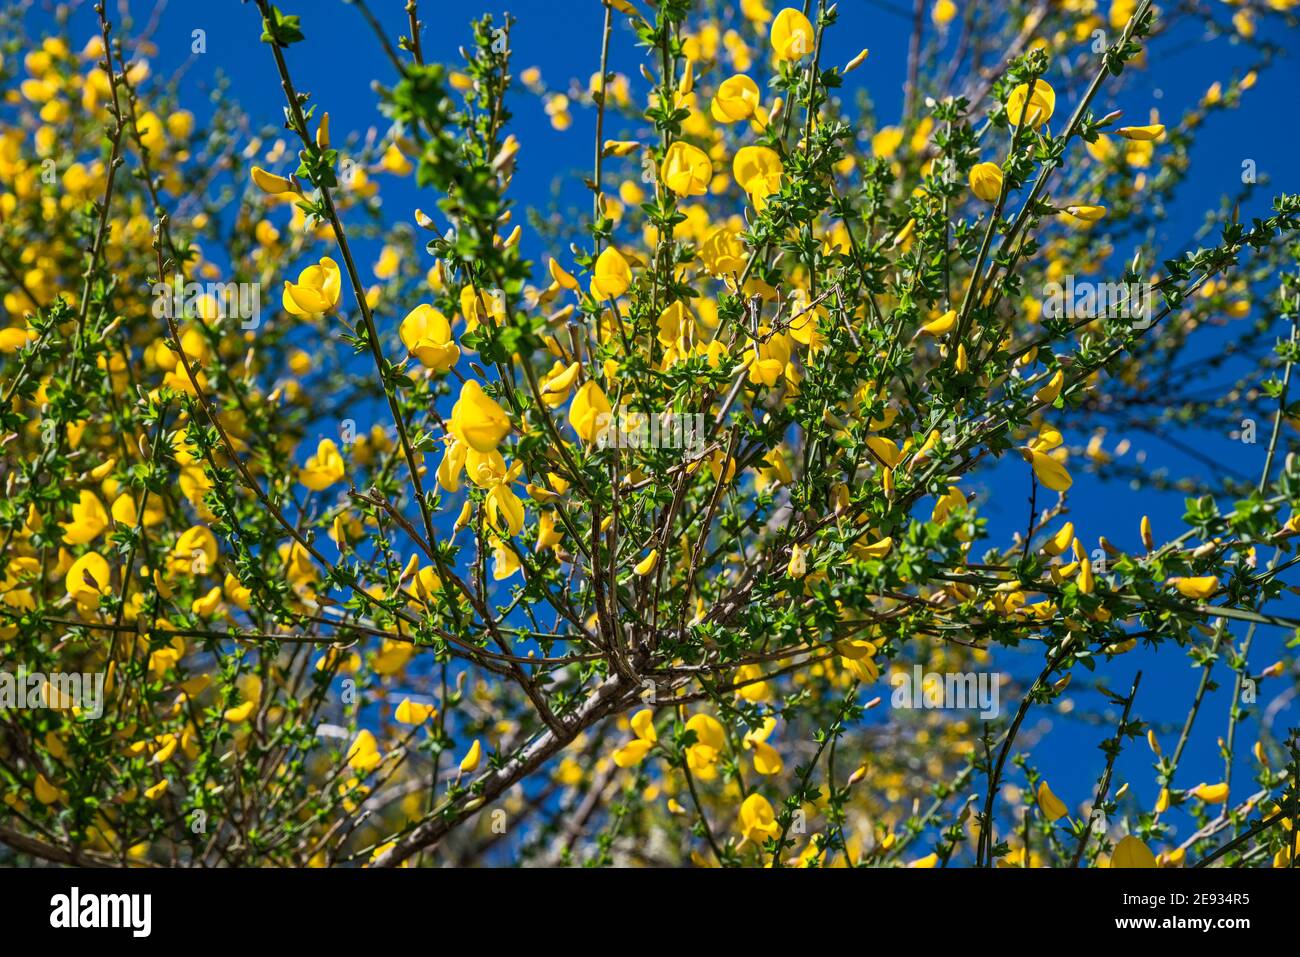 Spanish broom or hairy fruited broom, shrubs in bloom, Serra da Estrela Natural Park, Centro region, Portugal Stock Photo